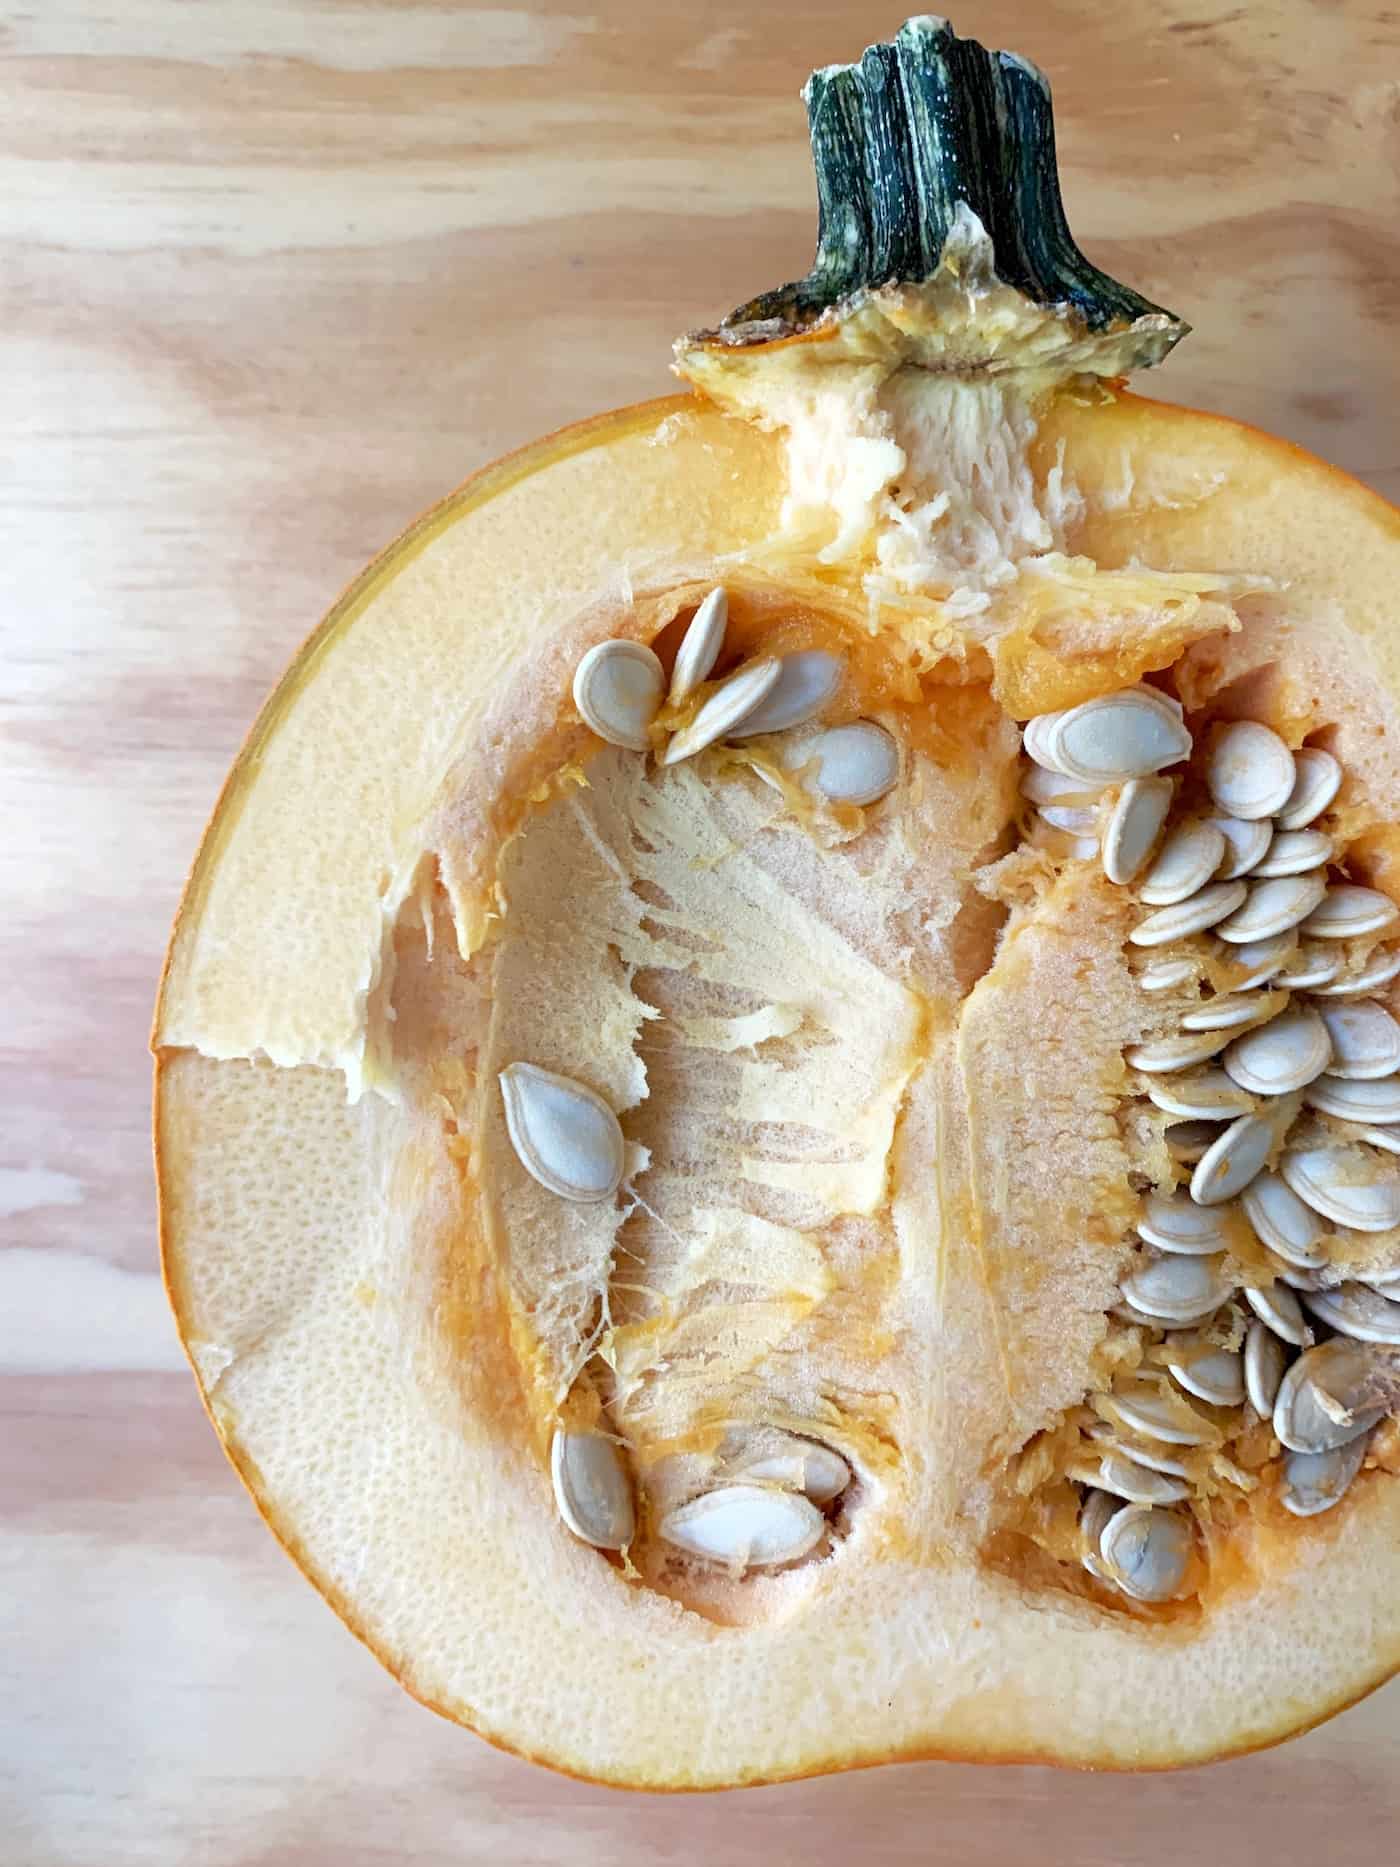 Pumpkin cut in half with seeds